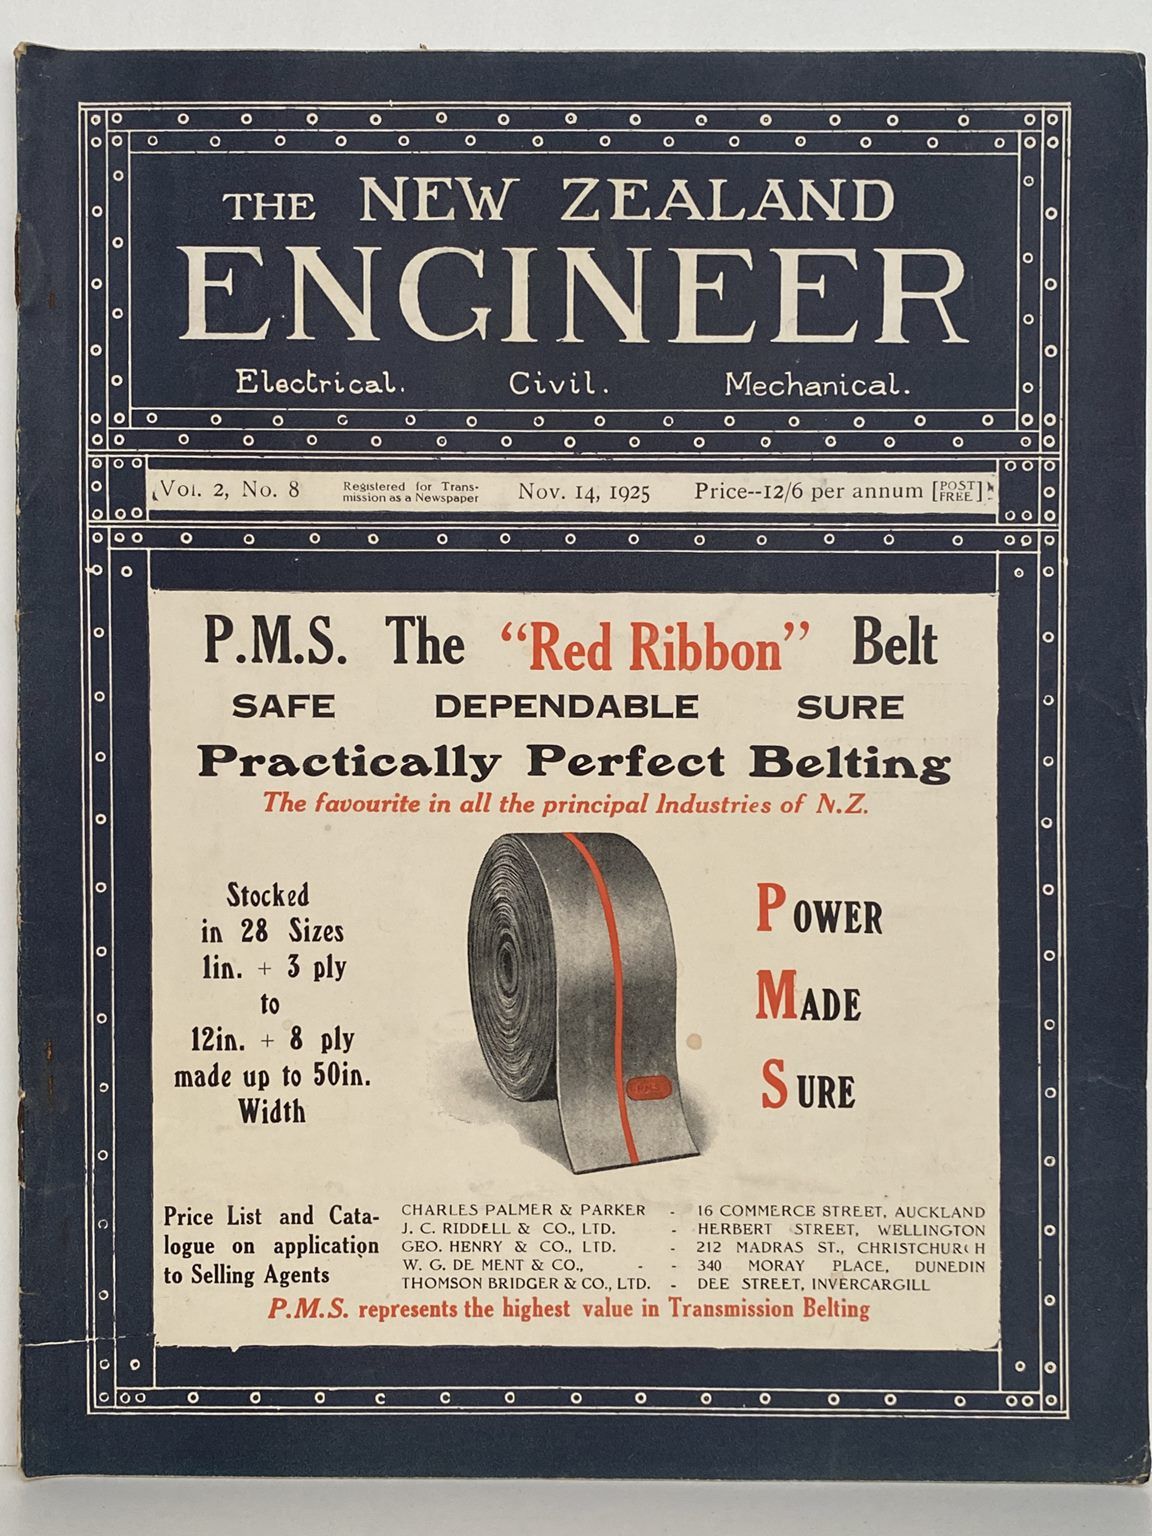 OLD MAGAZINE: The New Zealand Engineer Vol. 2, No. 8 - 14 November 1925